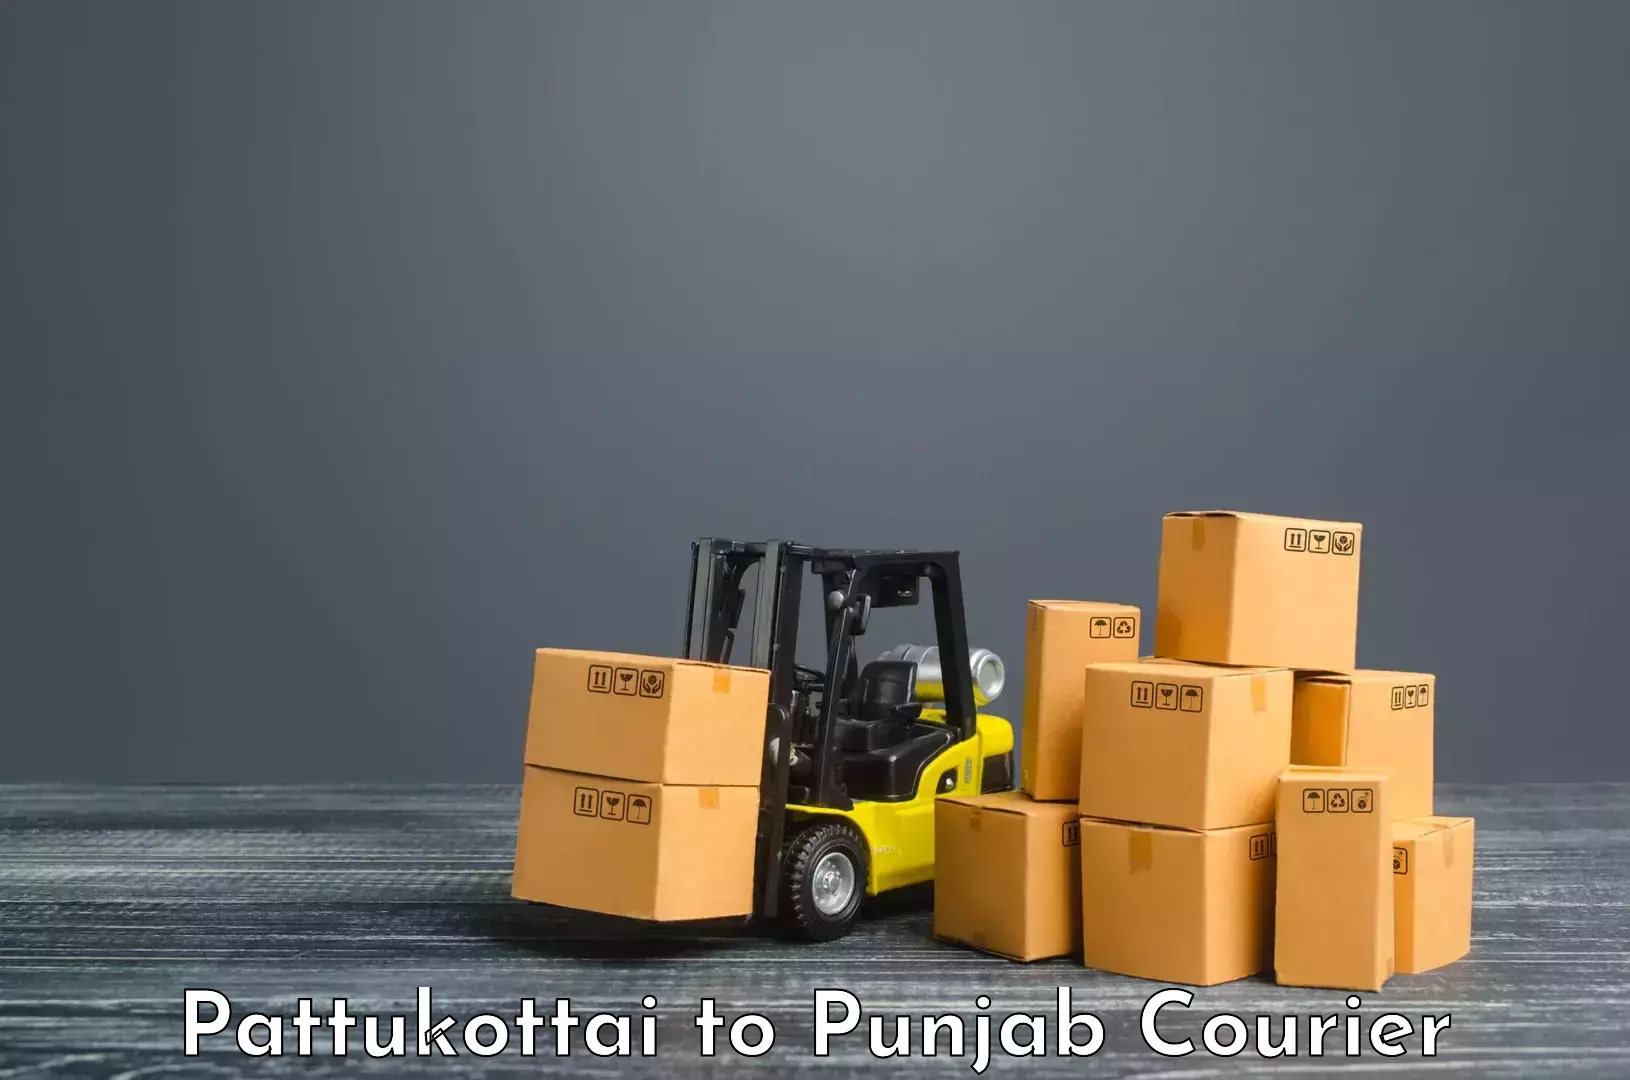 Flexible delivery scheduling Pattukottai to Nangal